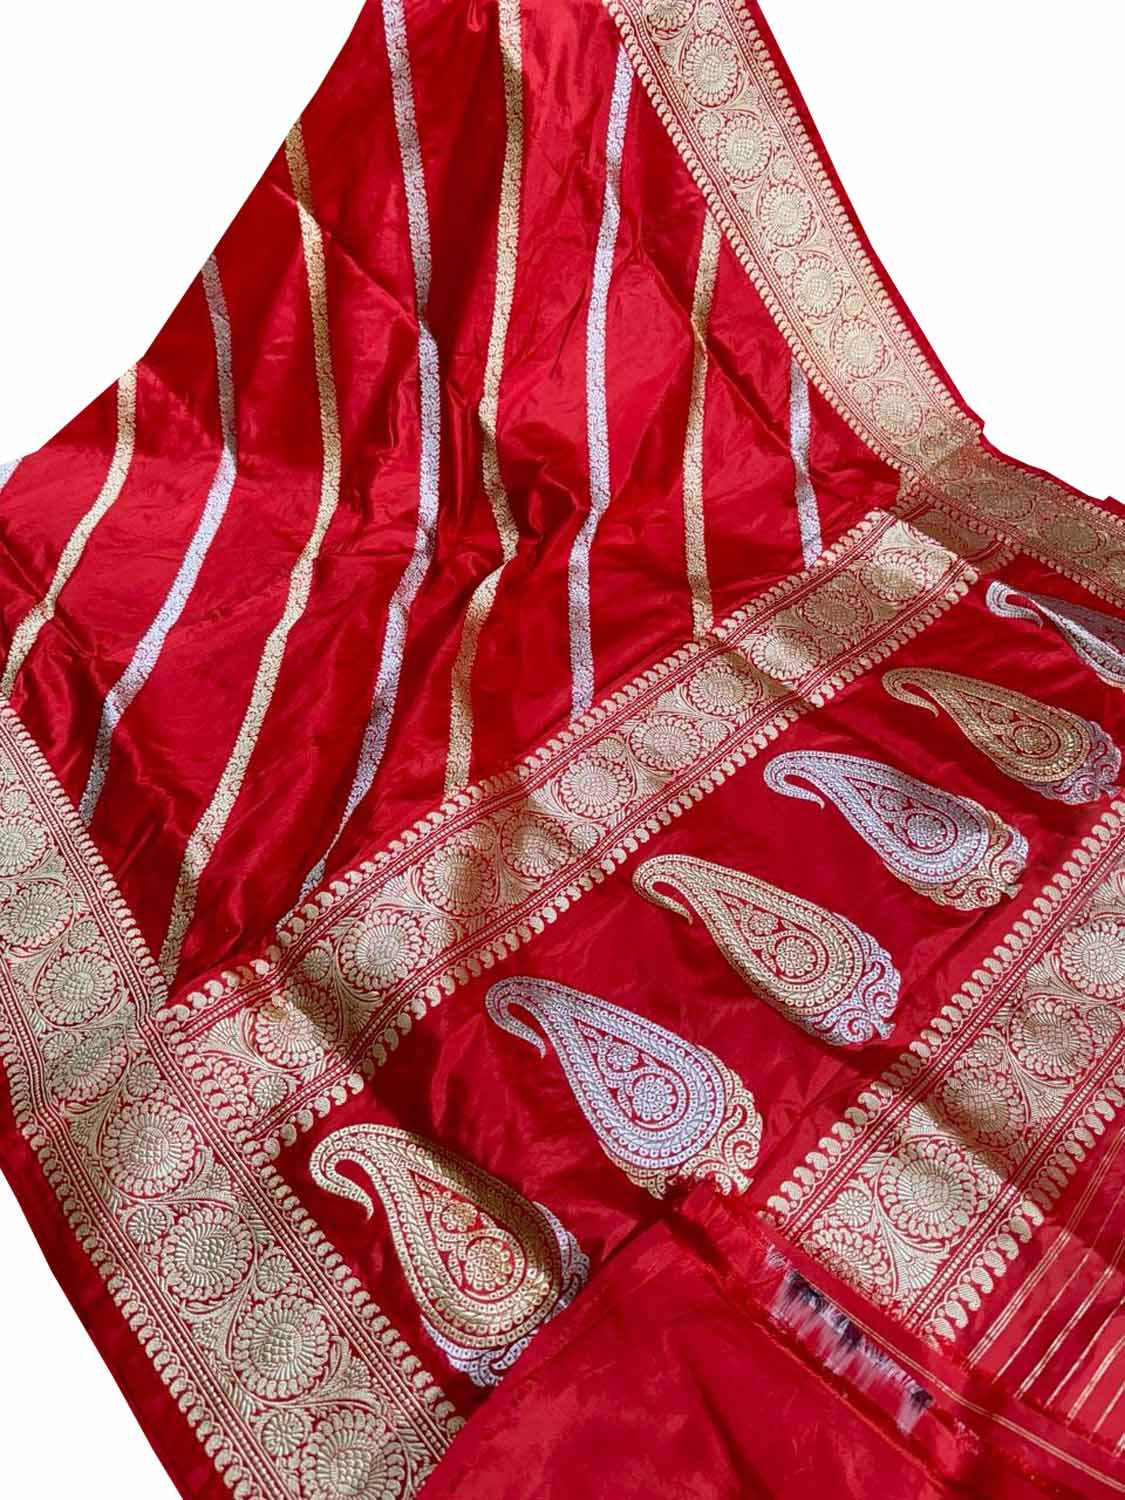 Exquisite Red Banarasi Silk Saree with Diagonal Design - Luxurion World